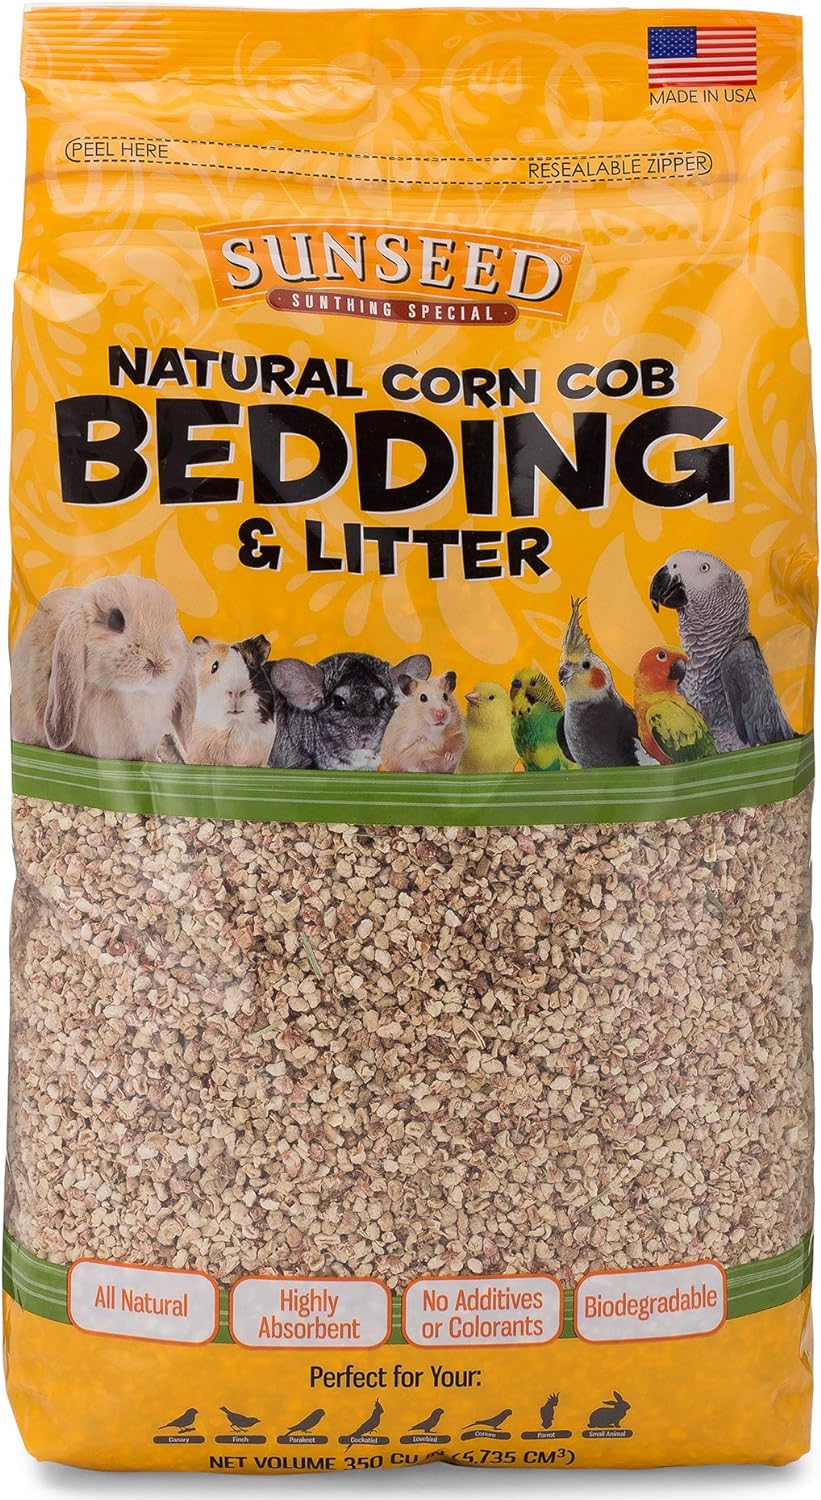 Corn Cob Bedding & Litter